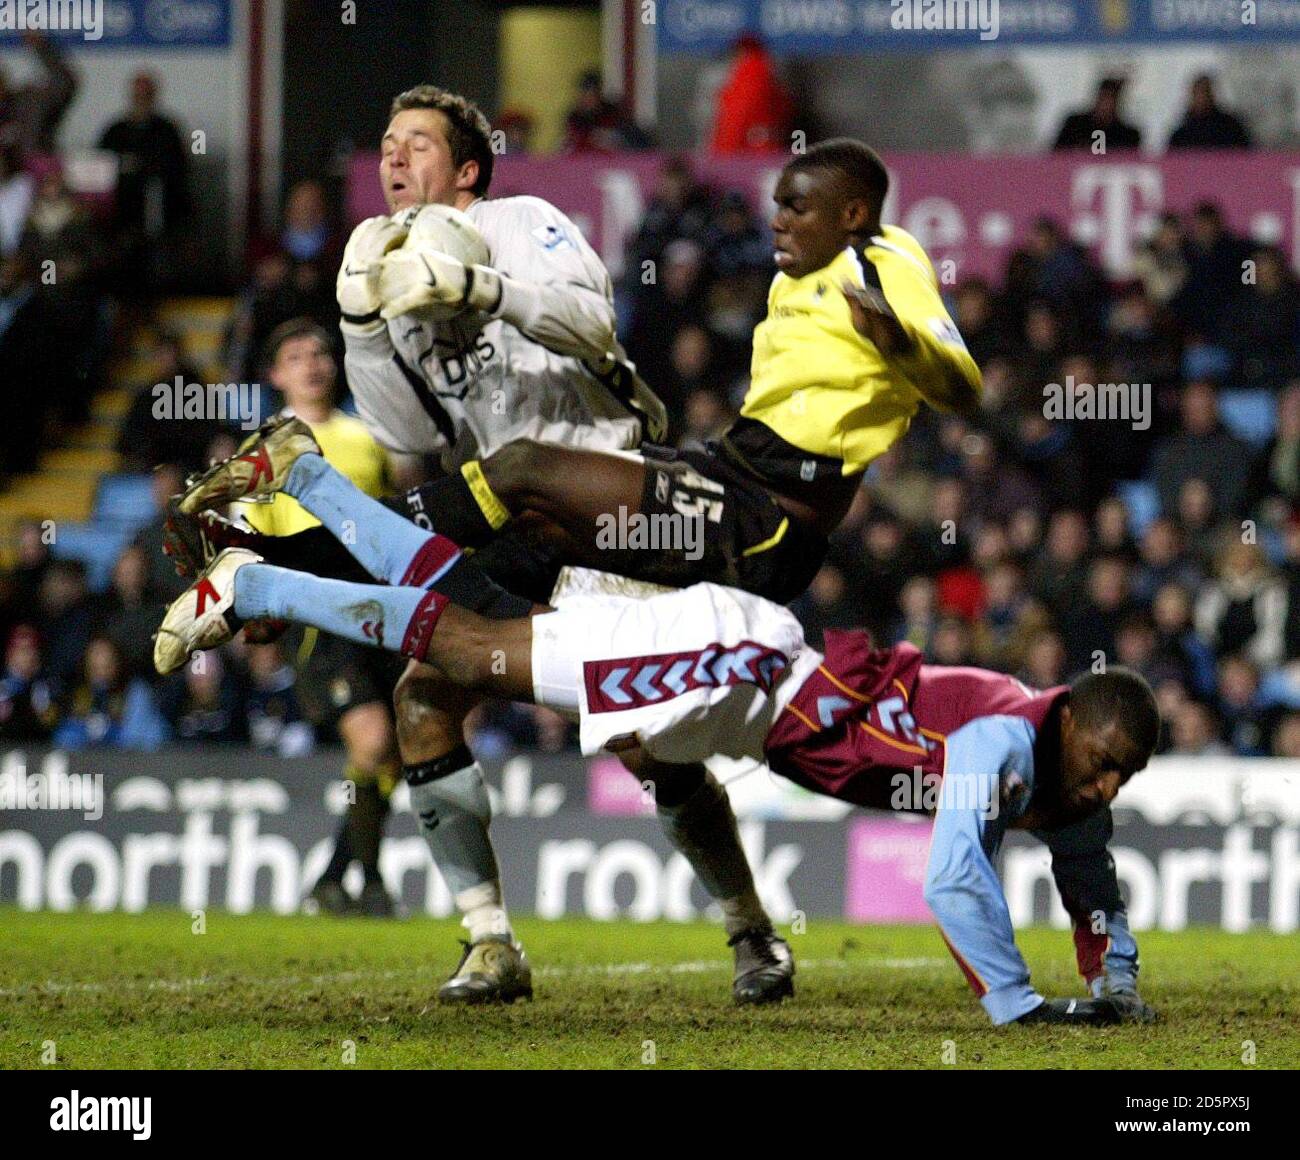 Aston Villa's goal keeper Thomas Sorensen collects the ball as Villa's Jlloyd Samuel and Manchester City's Micah Richards take a tumble. Stock Photo